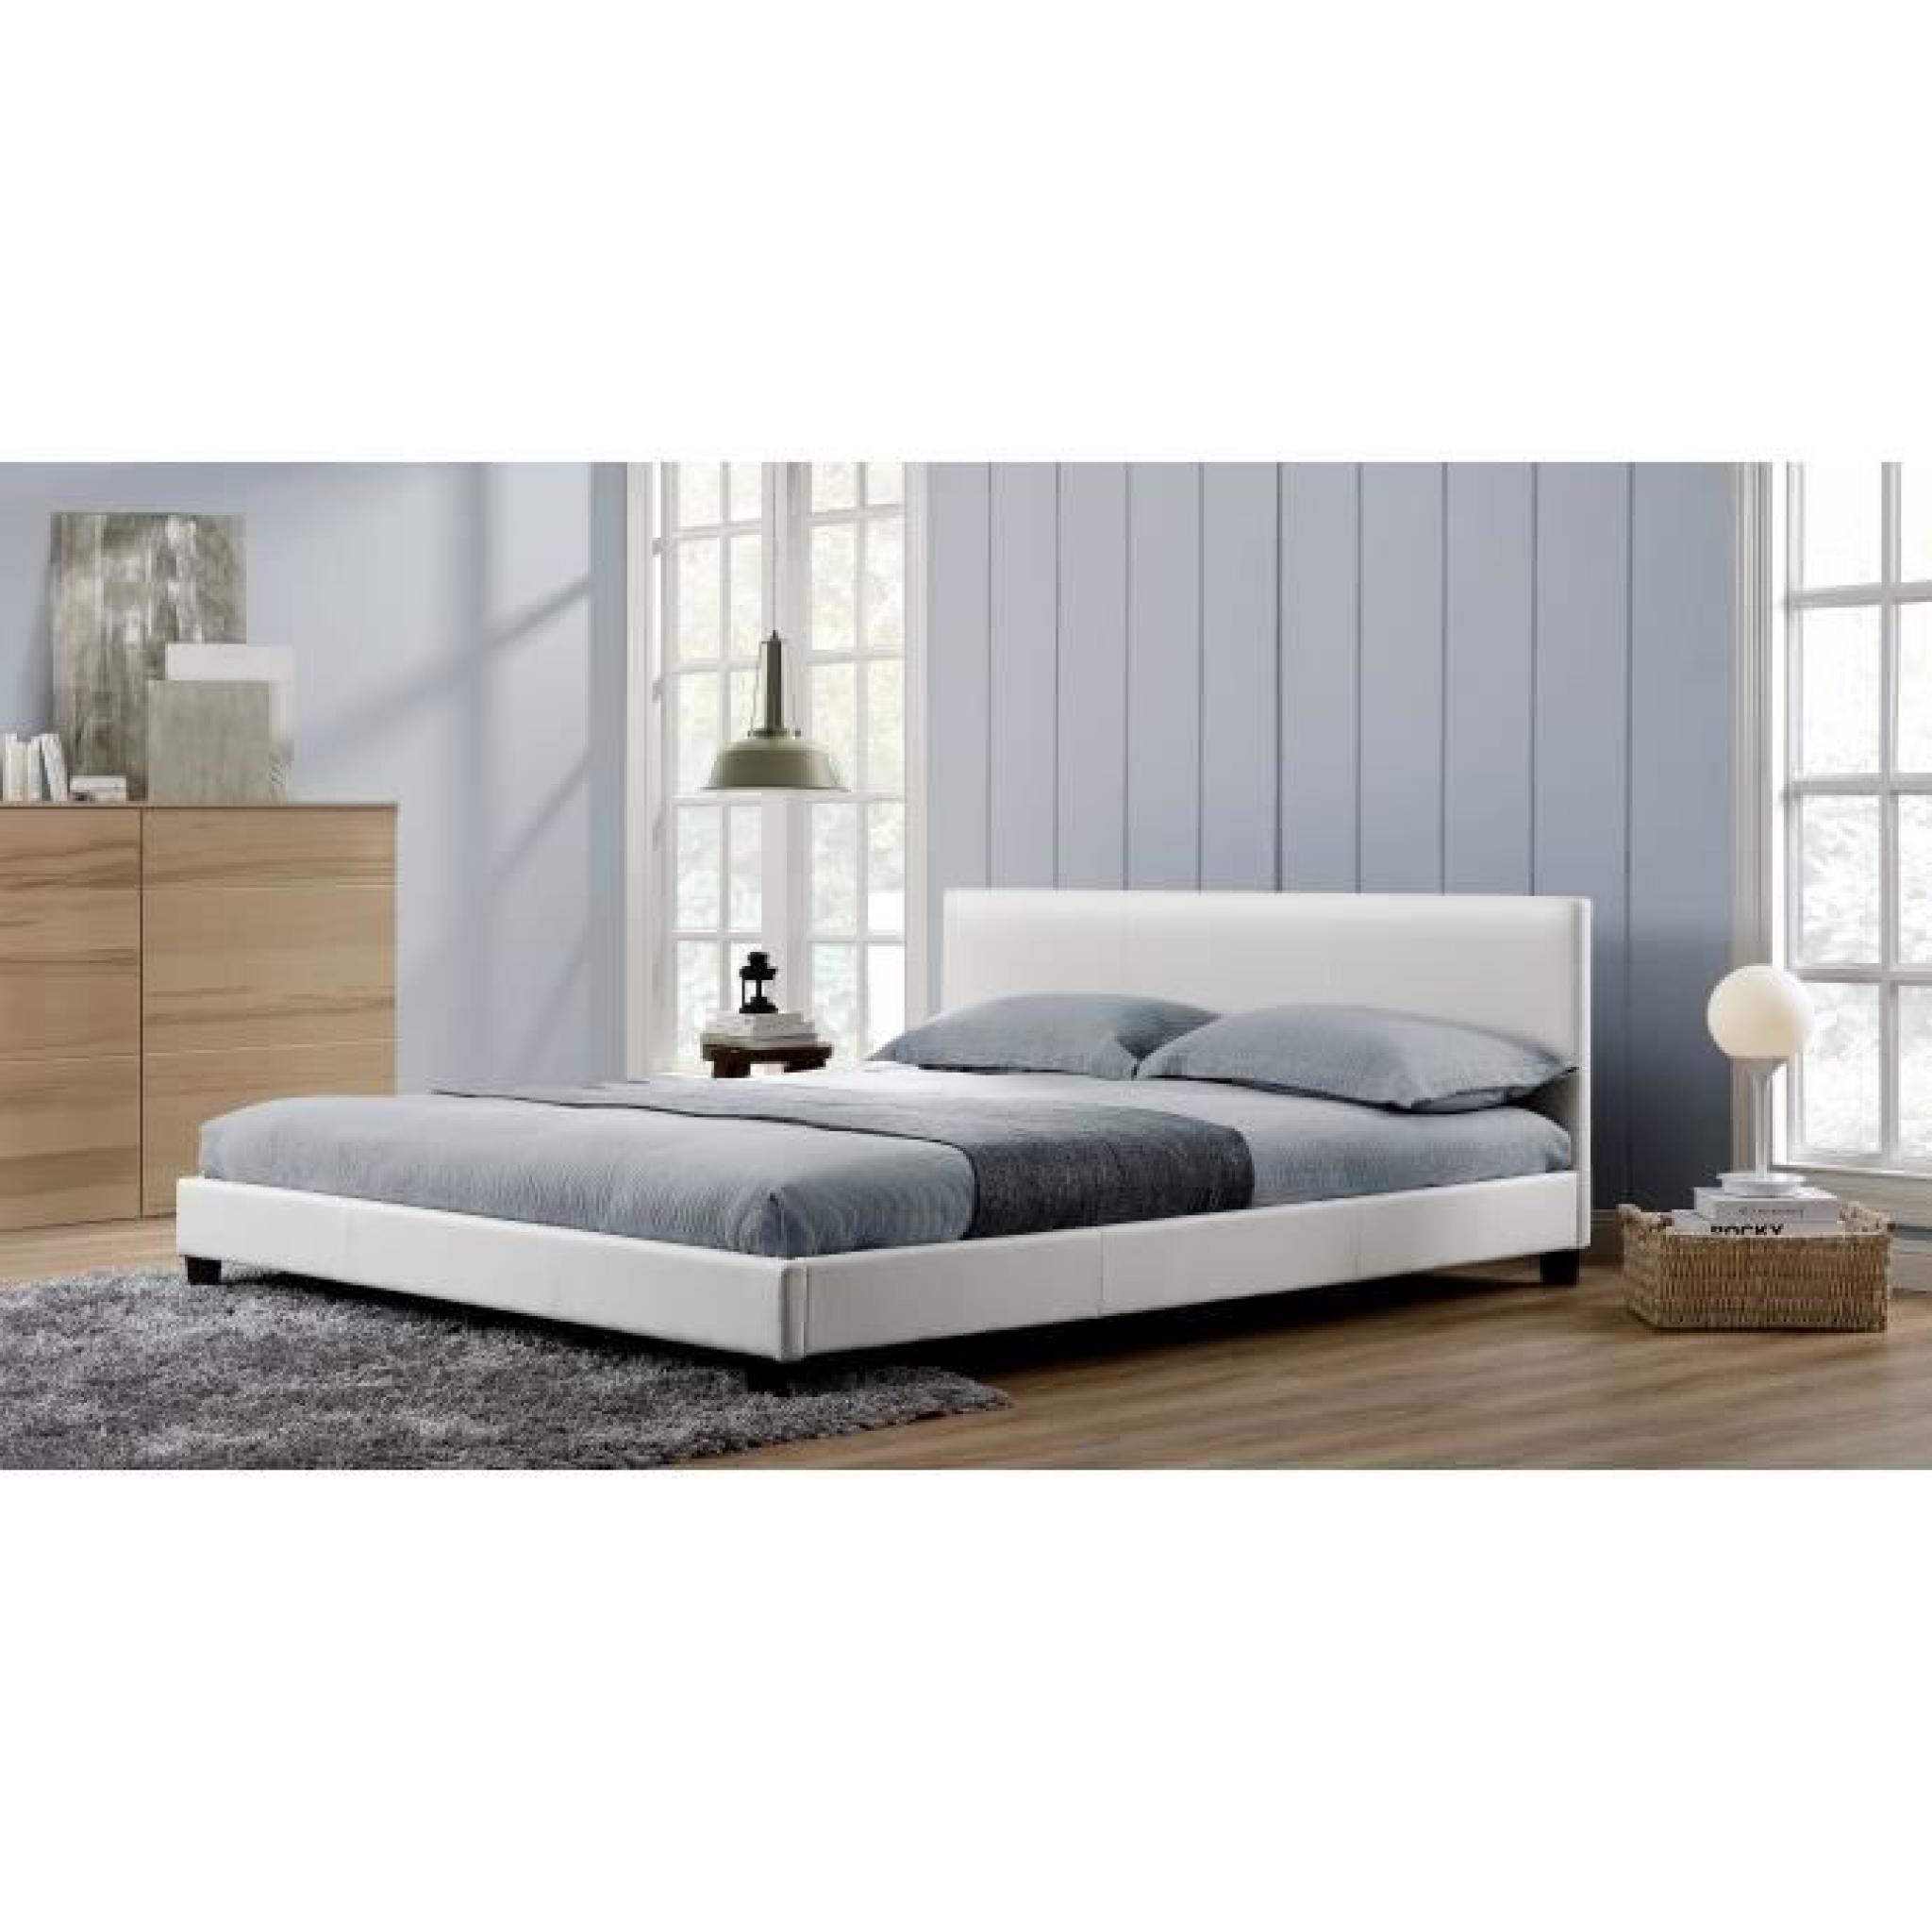 L'Angelo : Cadre de lit en simili cuir Blanc